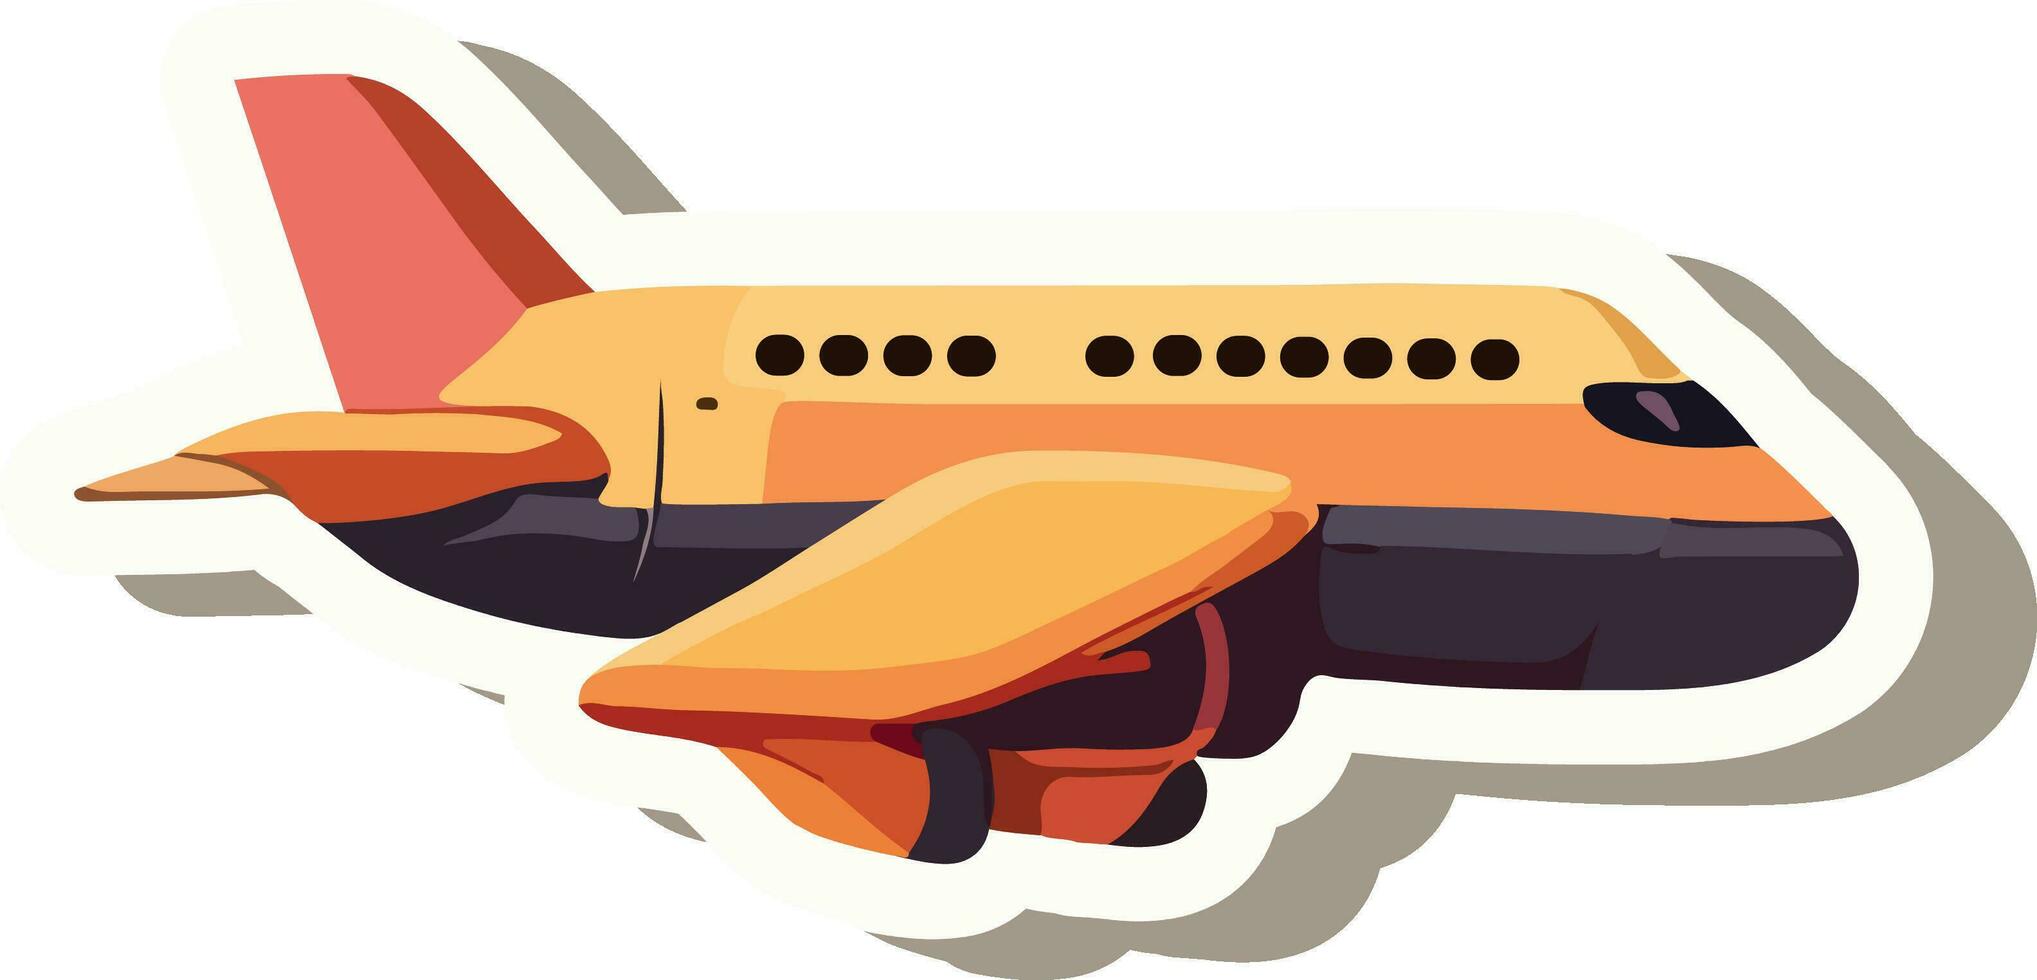 Sticker Style Airplane Icon In Orange And Purple Color. vector